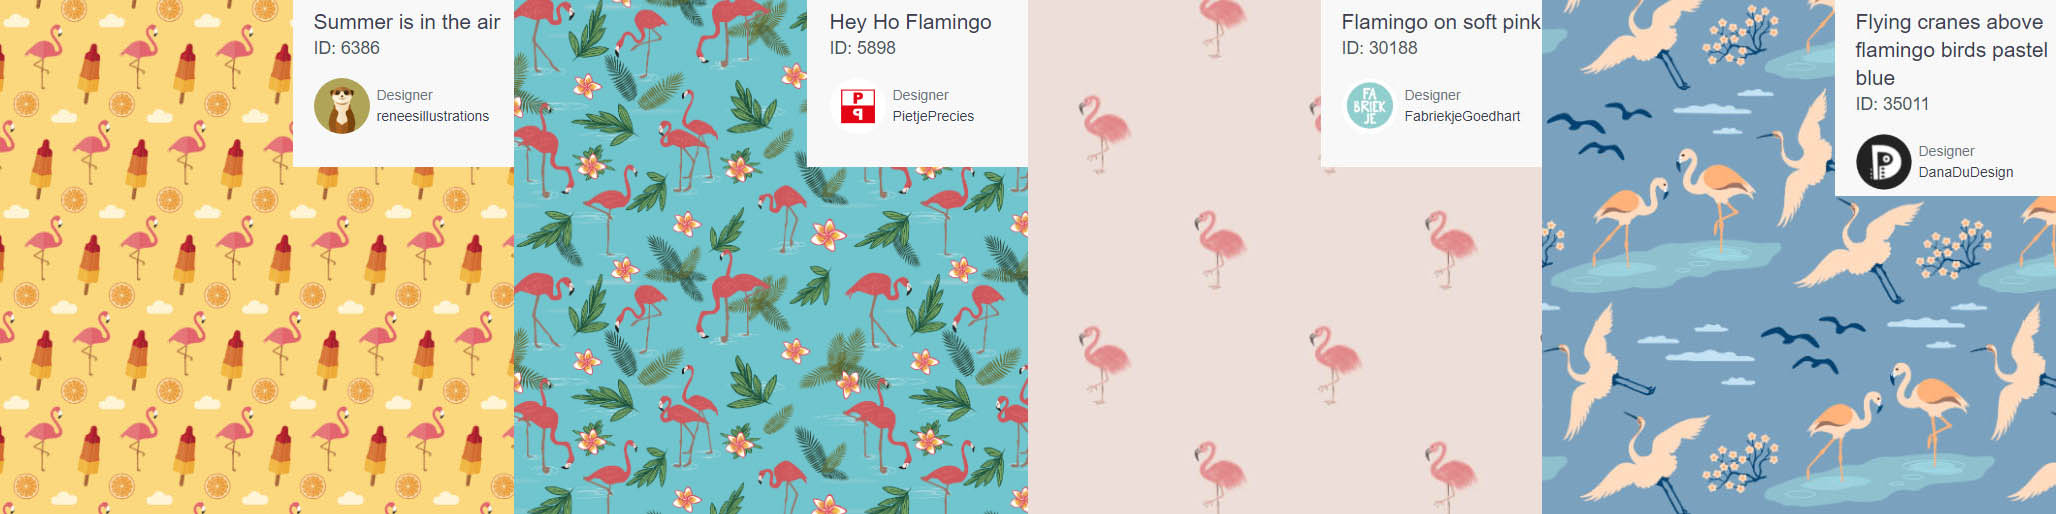 flamingo patronen collage 03jpg